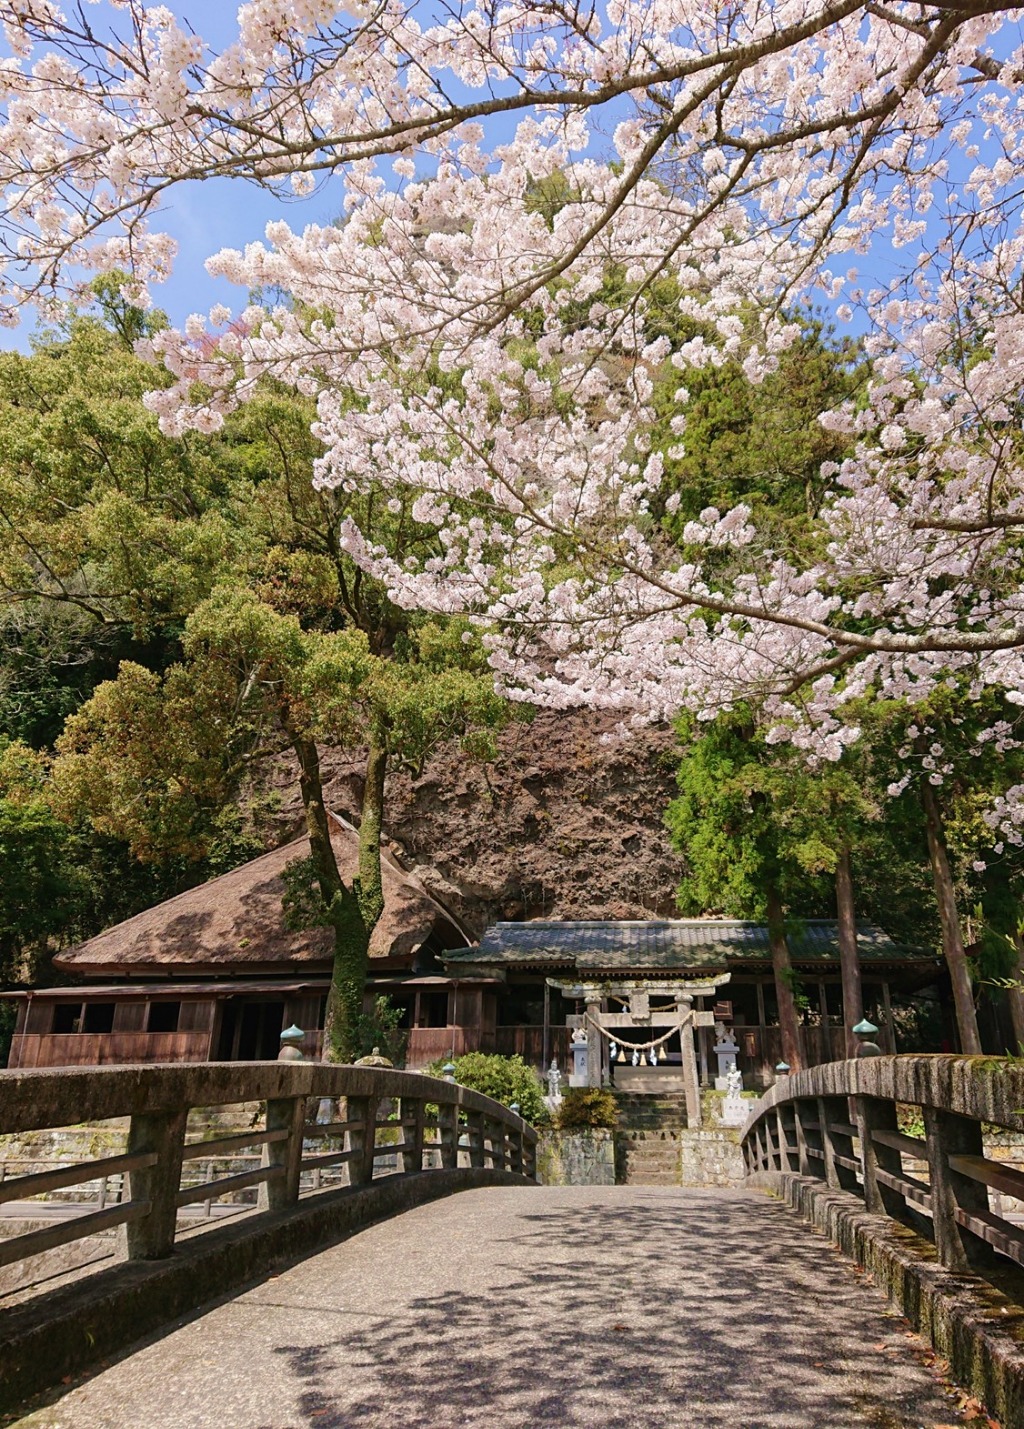 The cherry blossoms of Tennenji Temple